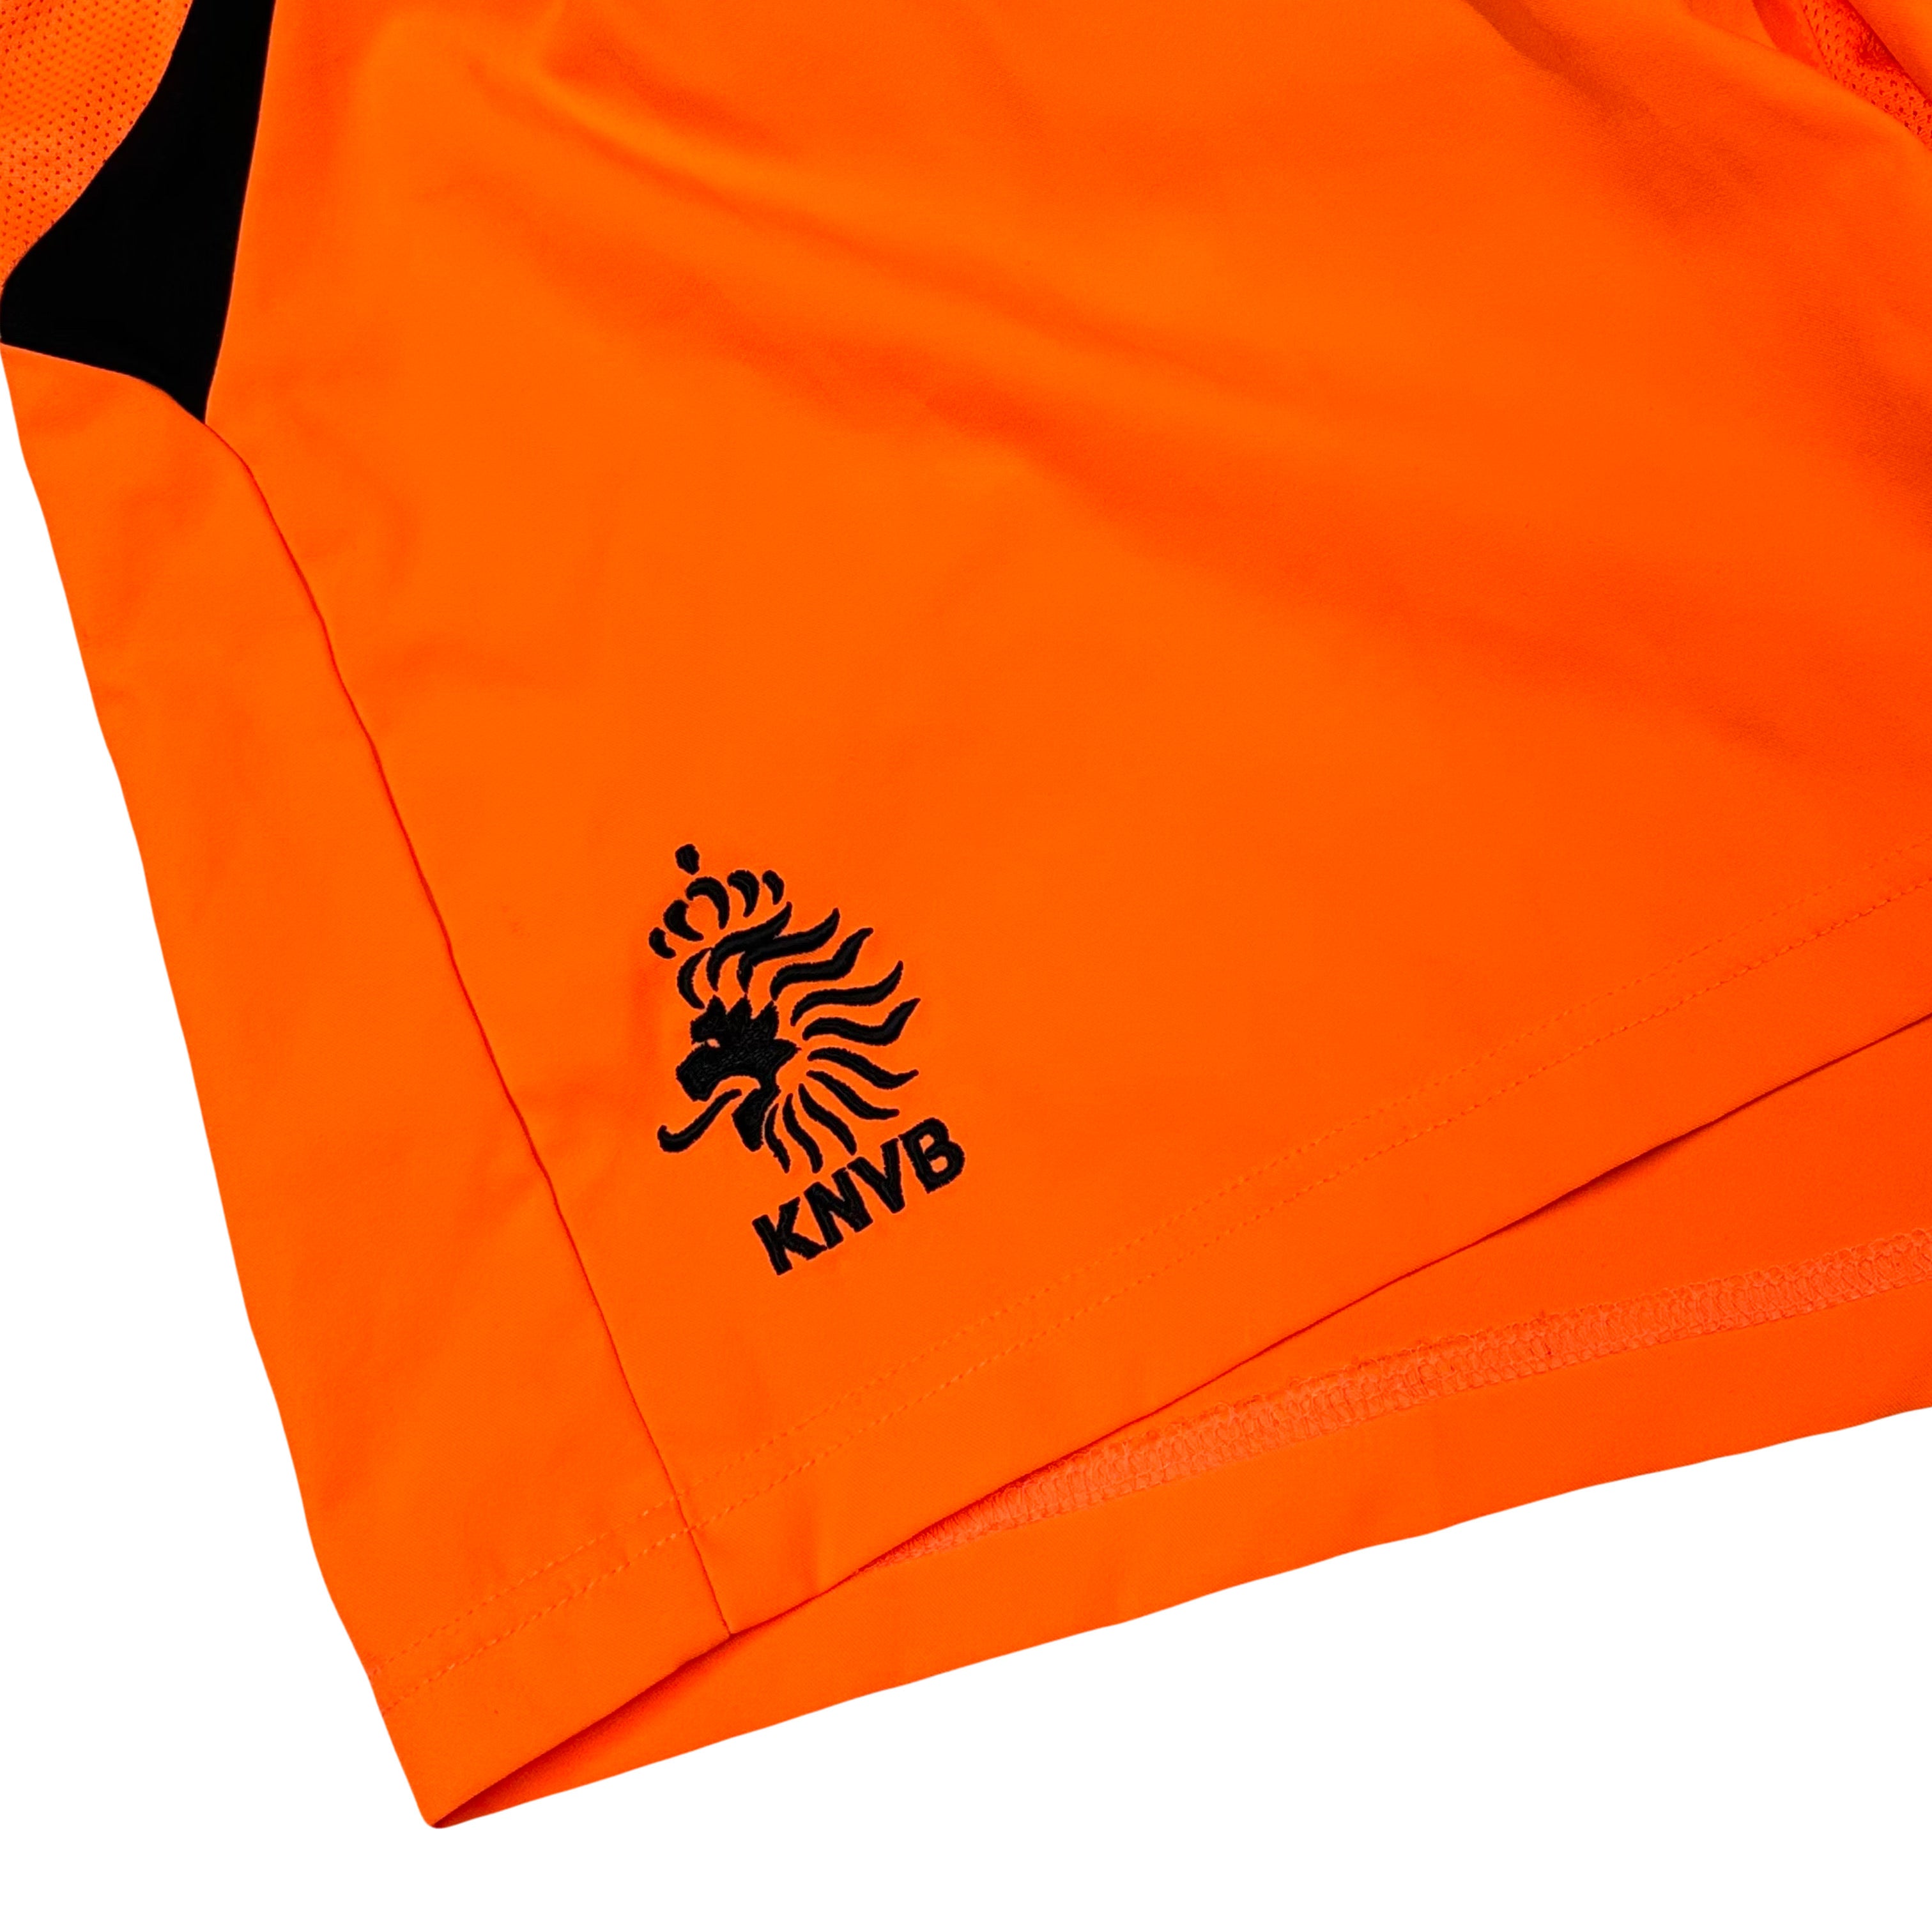 Nike Netherlands 2002-04 Nylon Football Shorts In Orange ( XL )